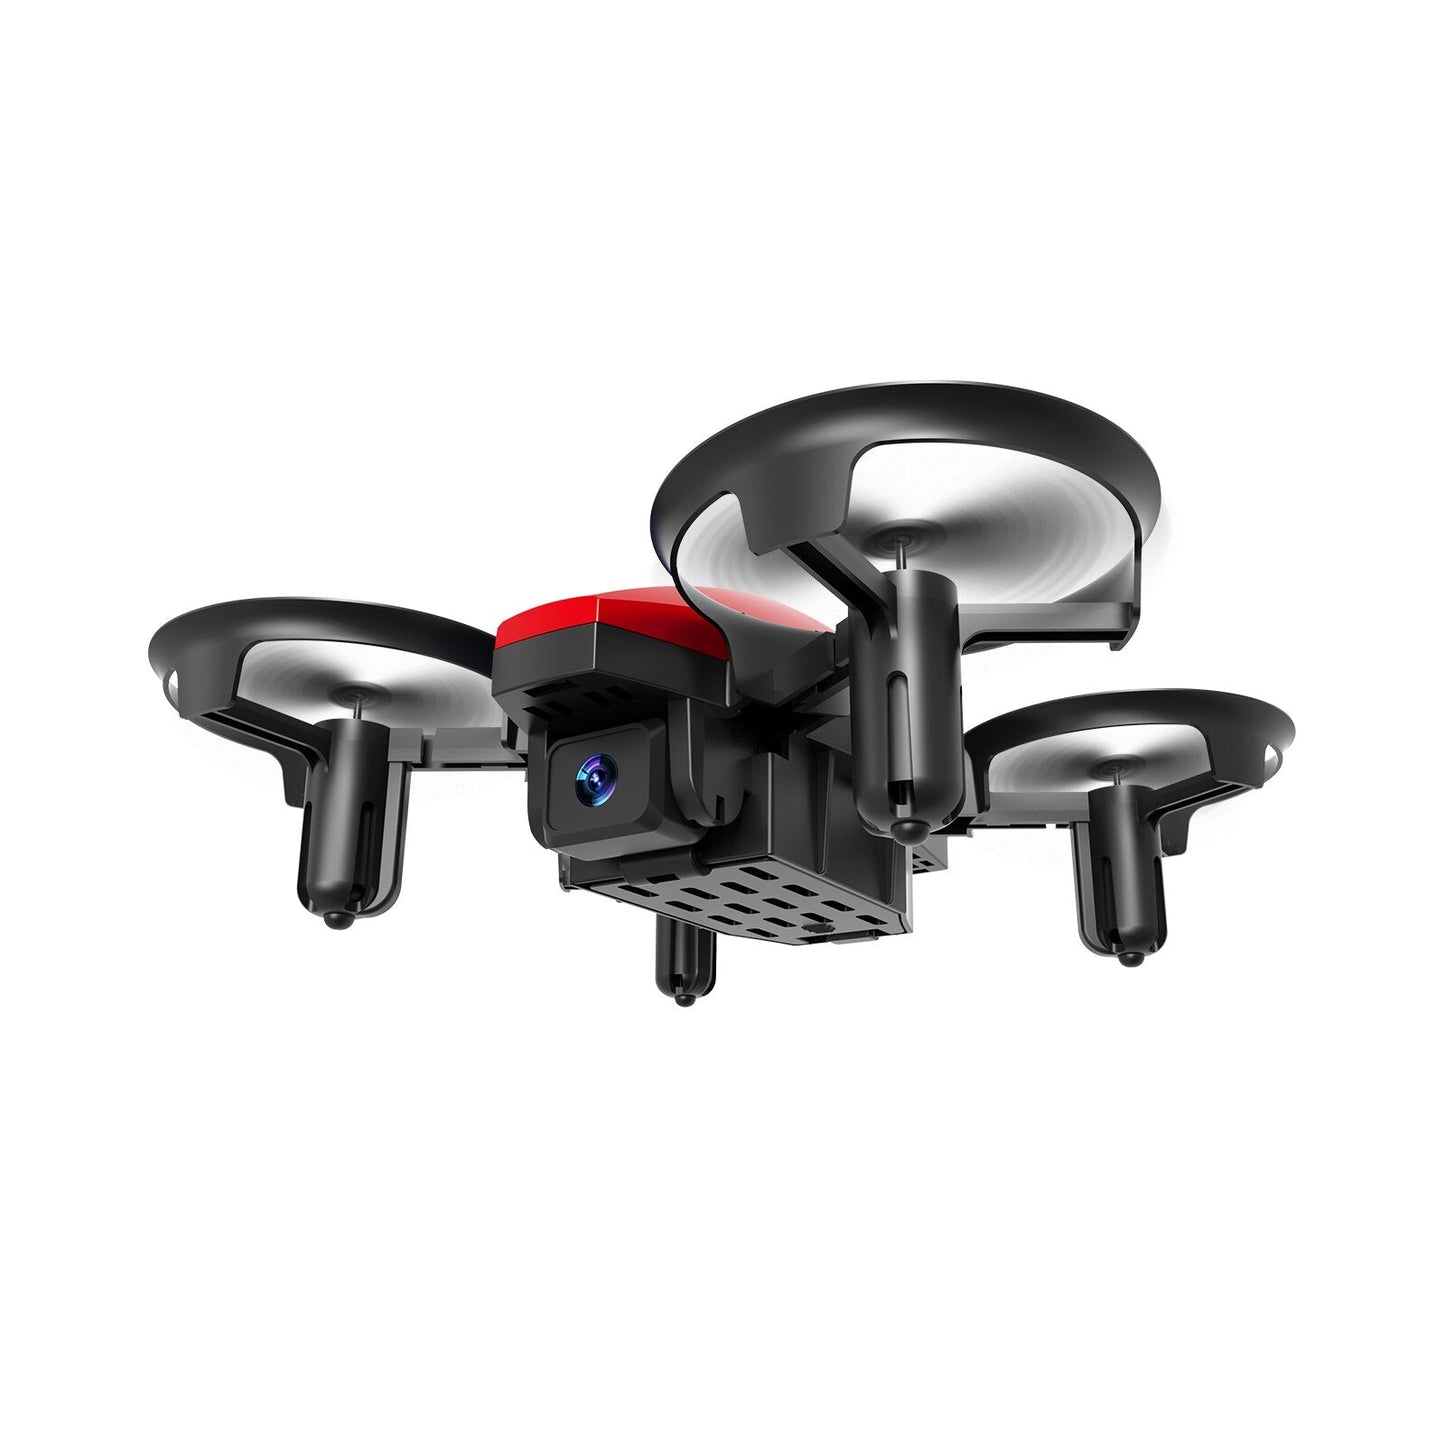 Mini Remote Control Quadcopter with 360 Degree Video Capture